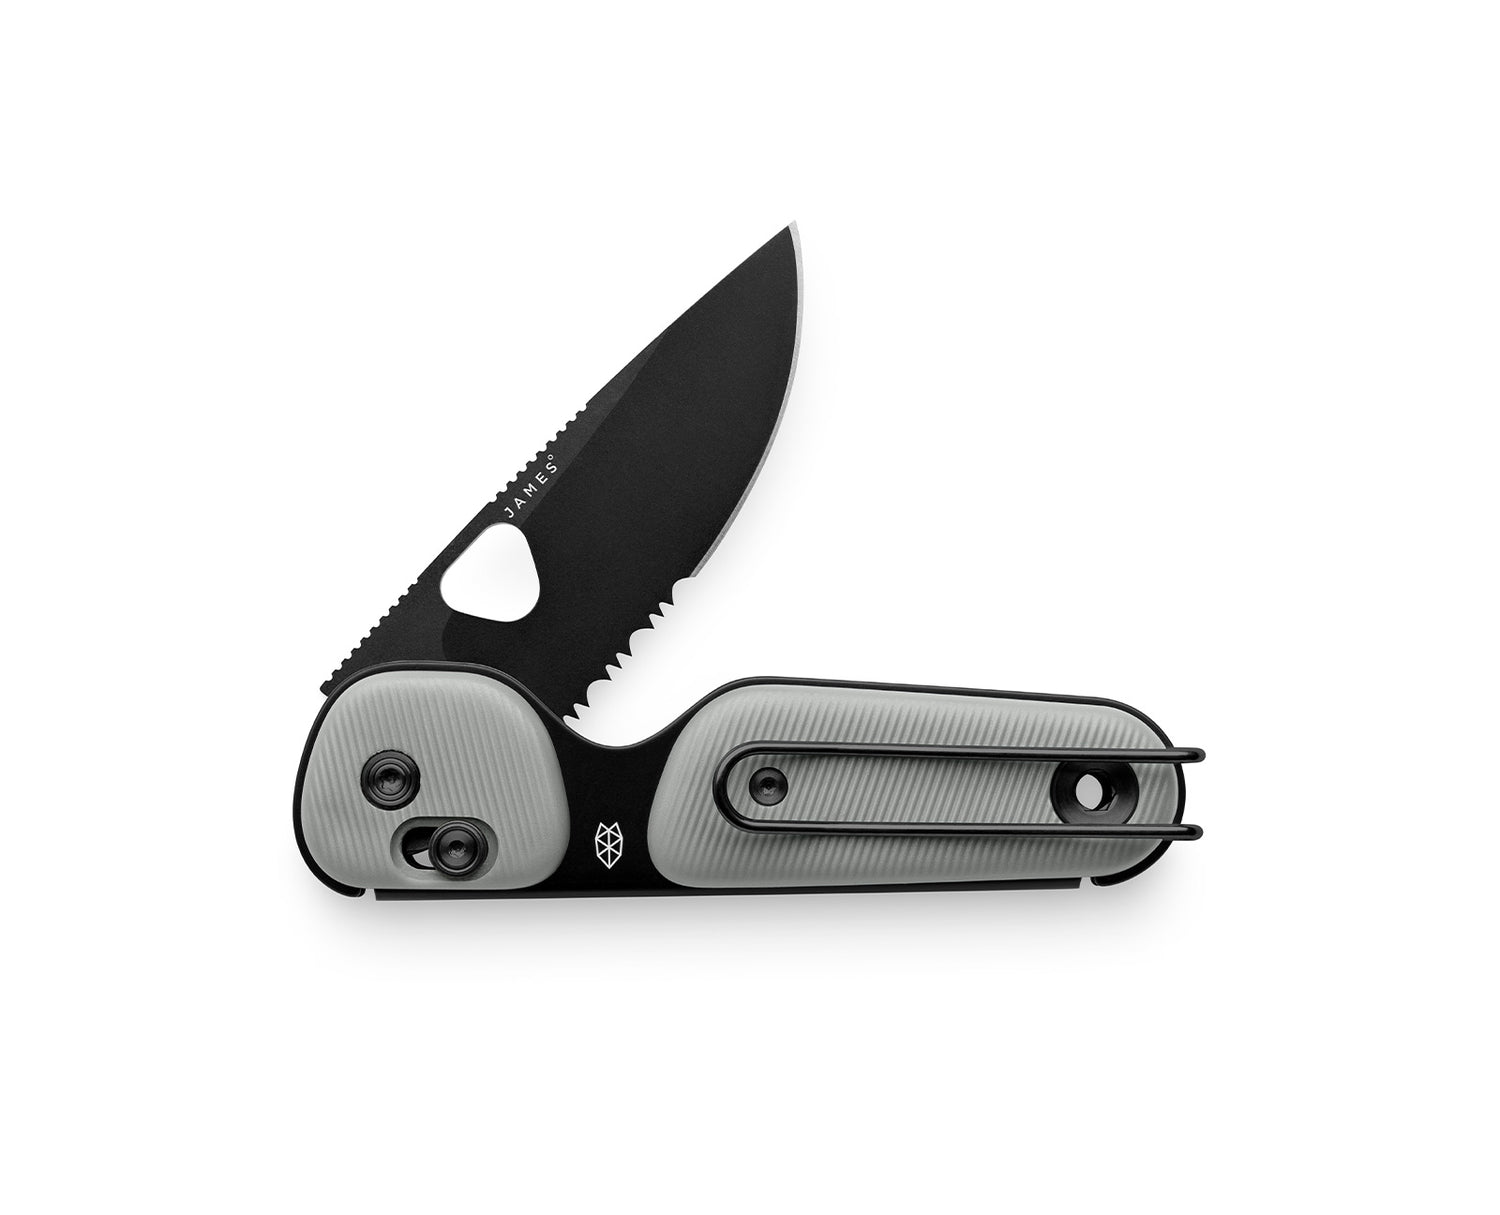 Lighter Knife - Pocket Knife with Black Stainless Steel Blade